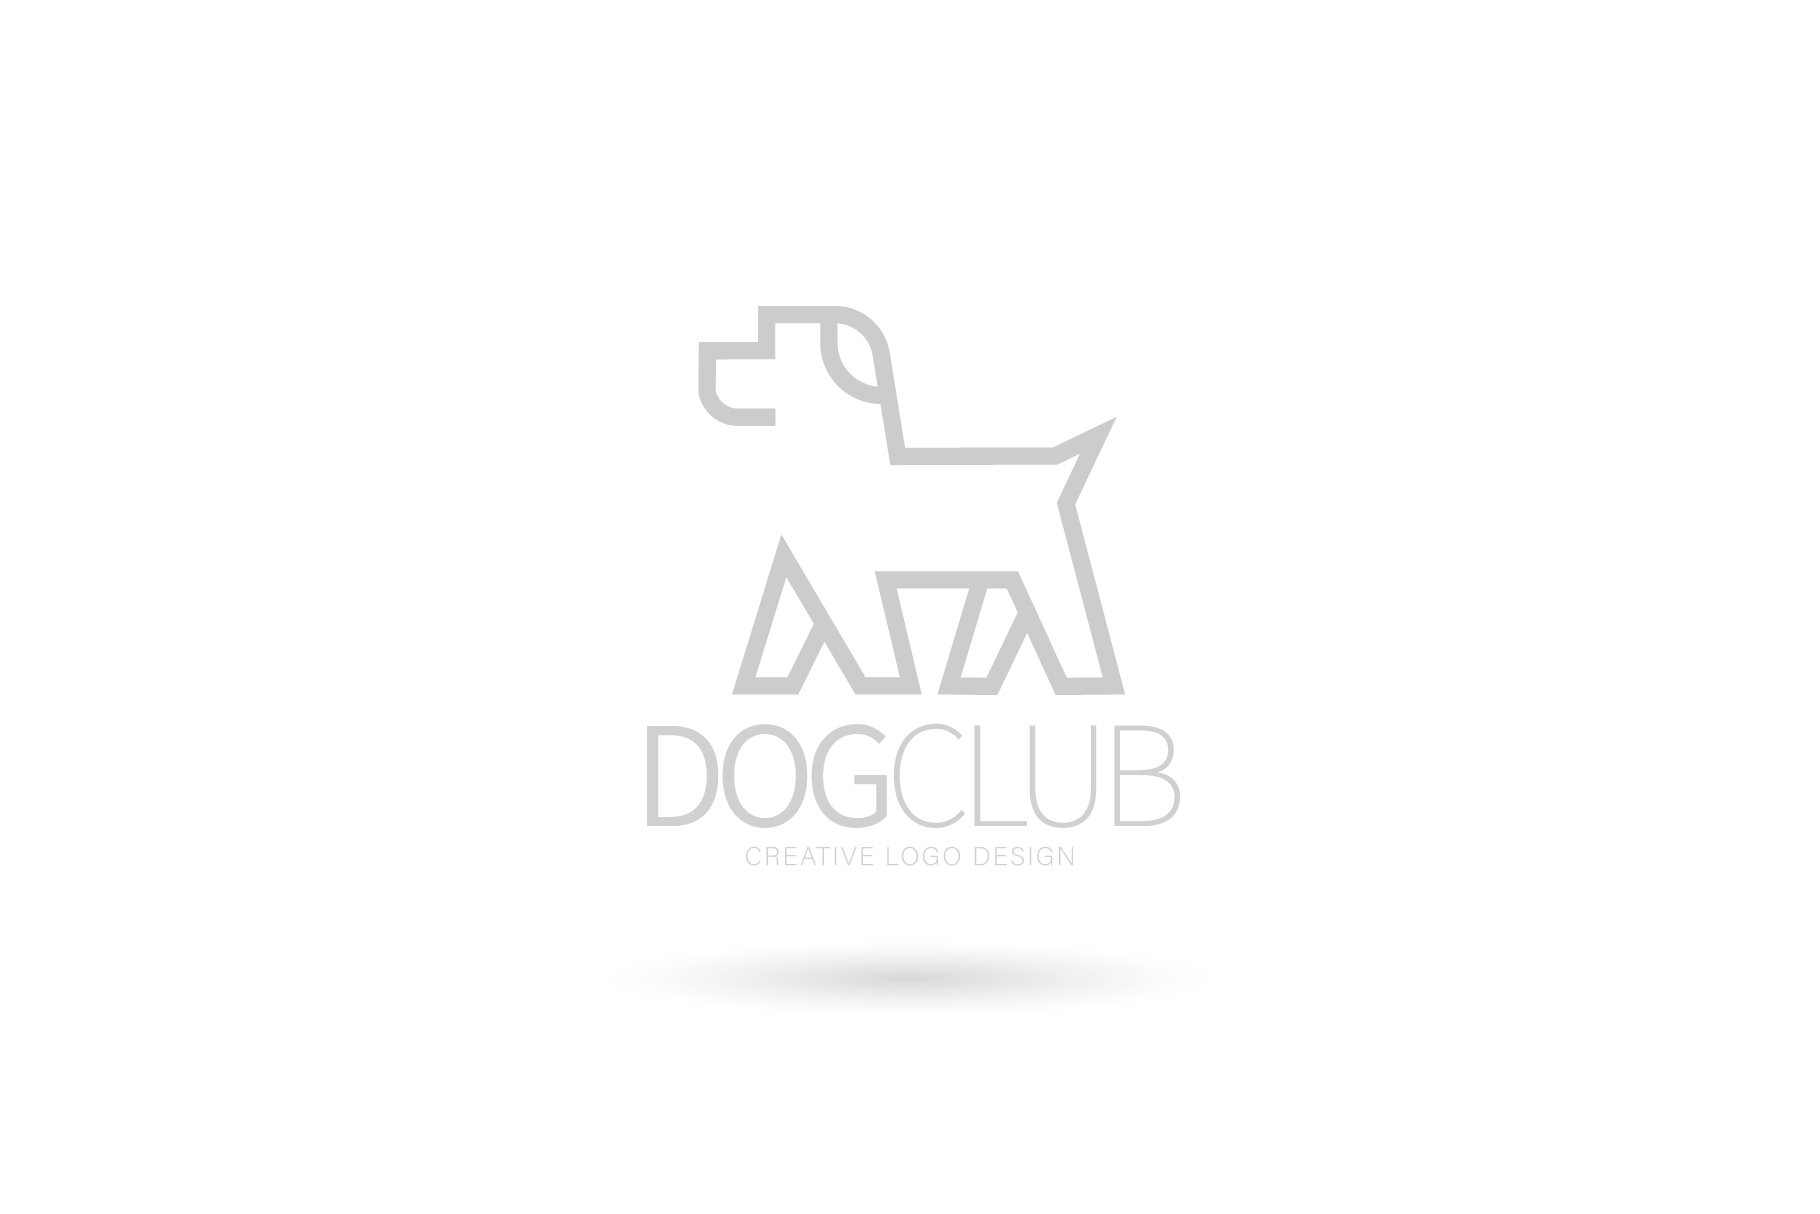 Dog logo preview image.